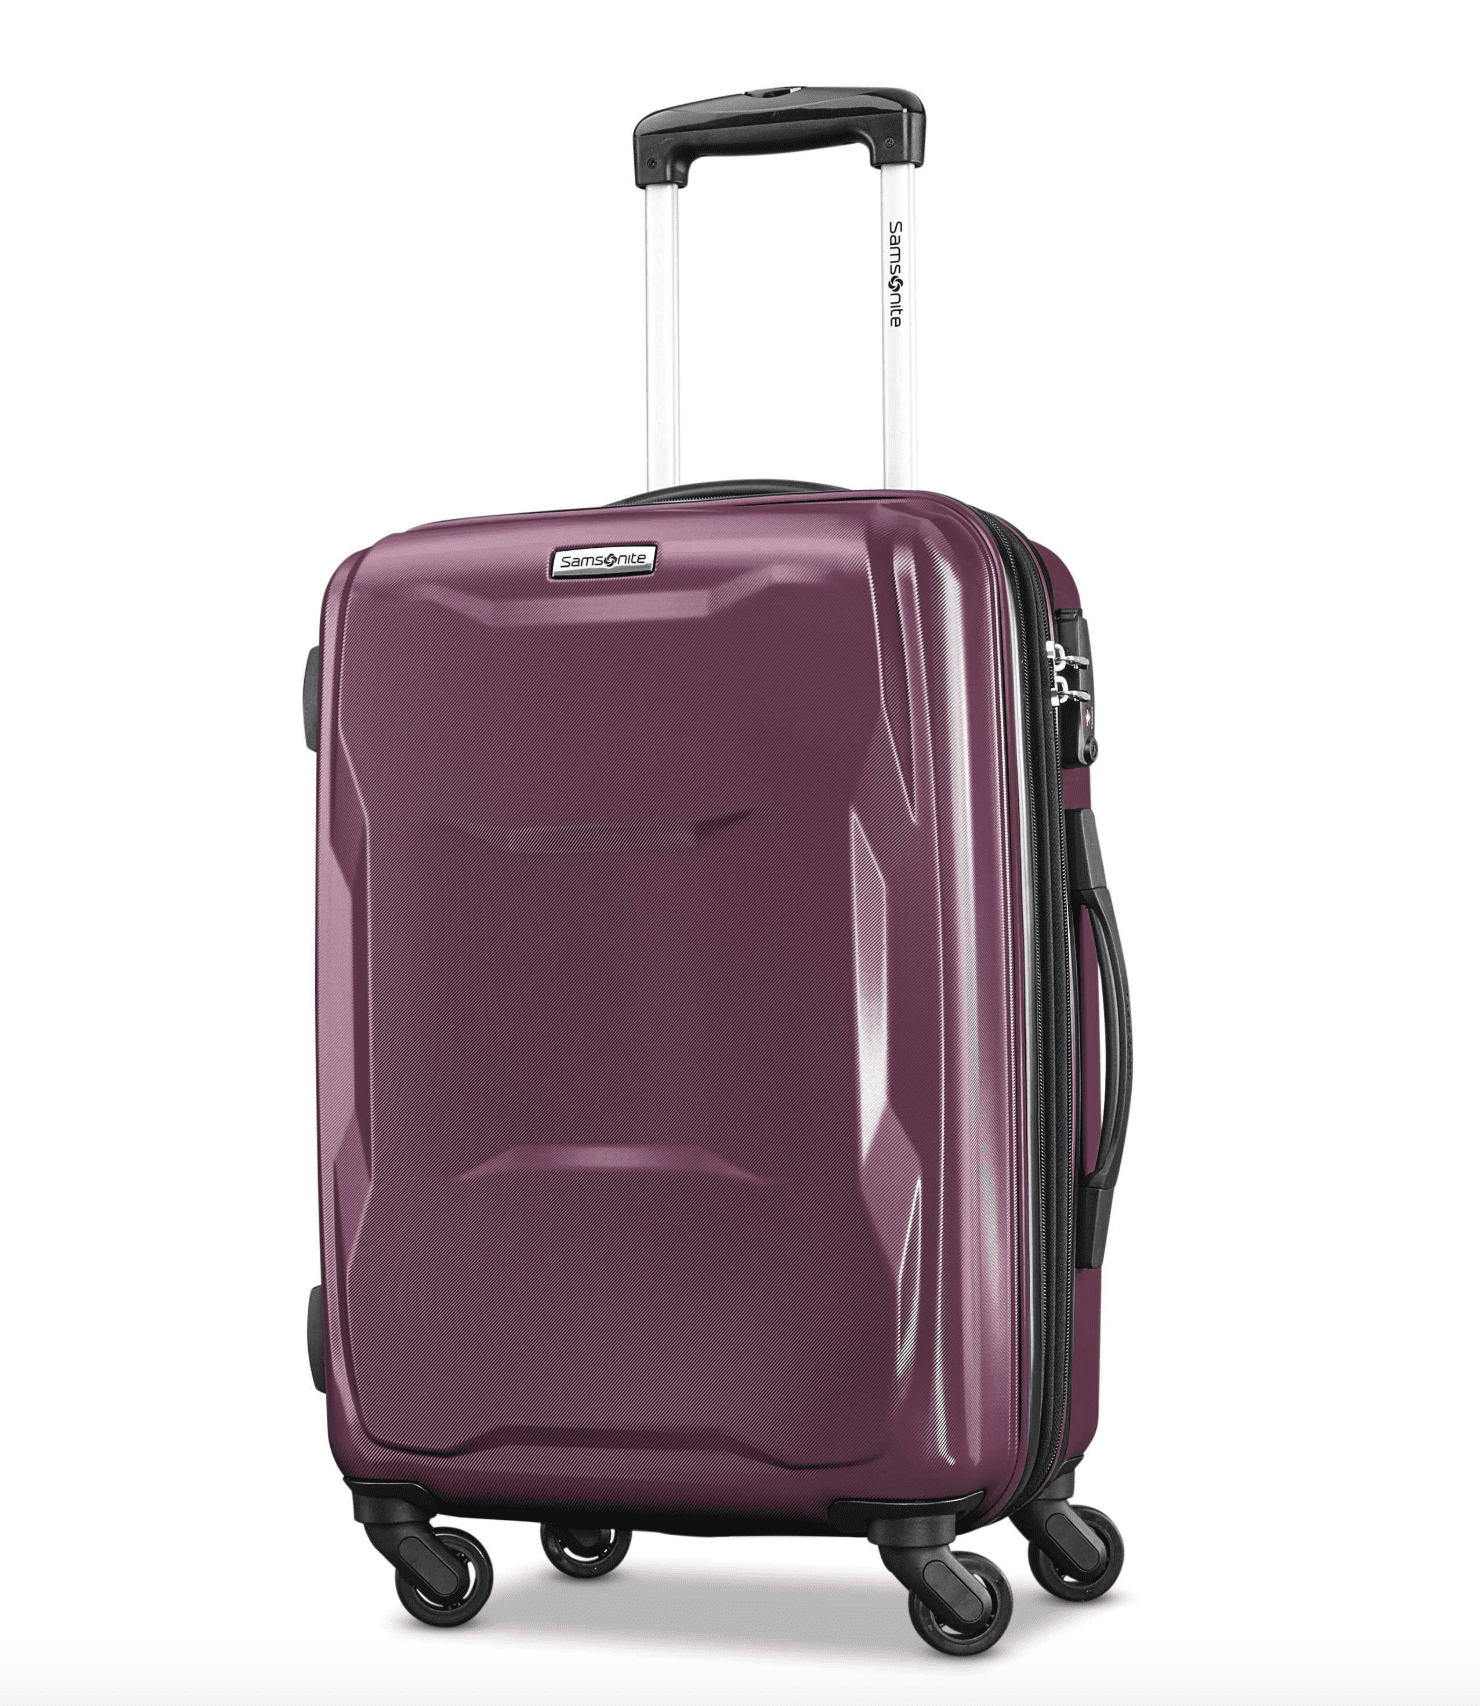 Samsonite - Samsonite Pivot 20' Carry-On Hardside Spinner Luggage (Purple) - Walmart.com 